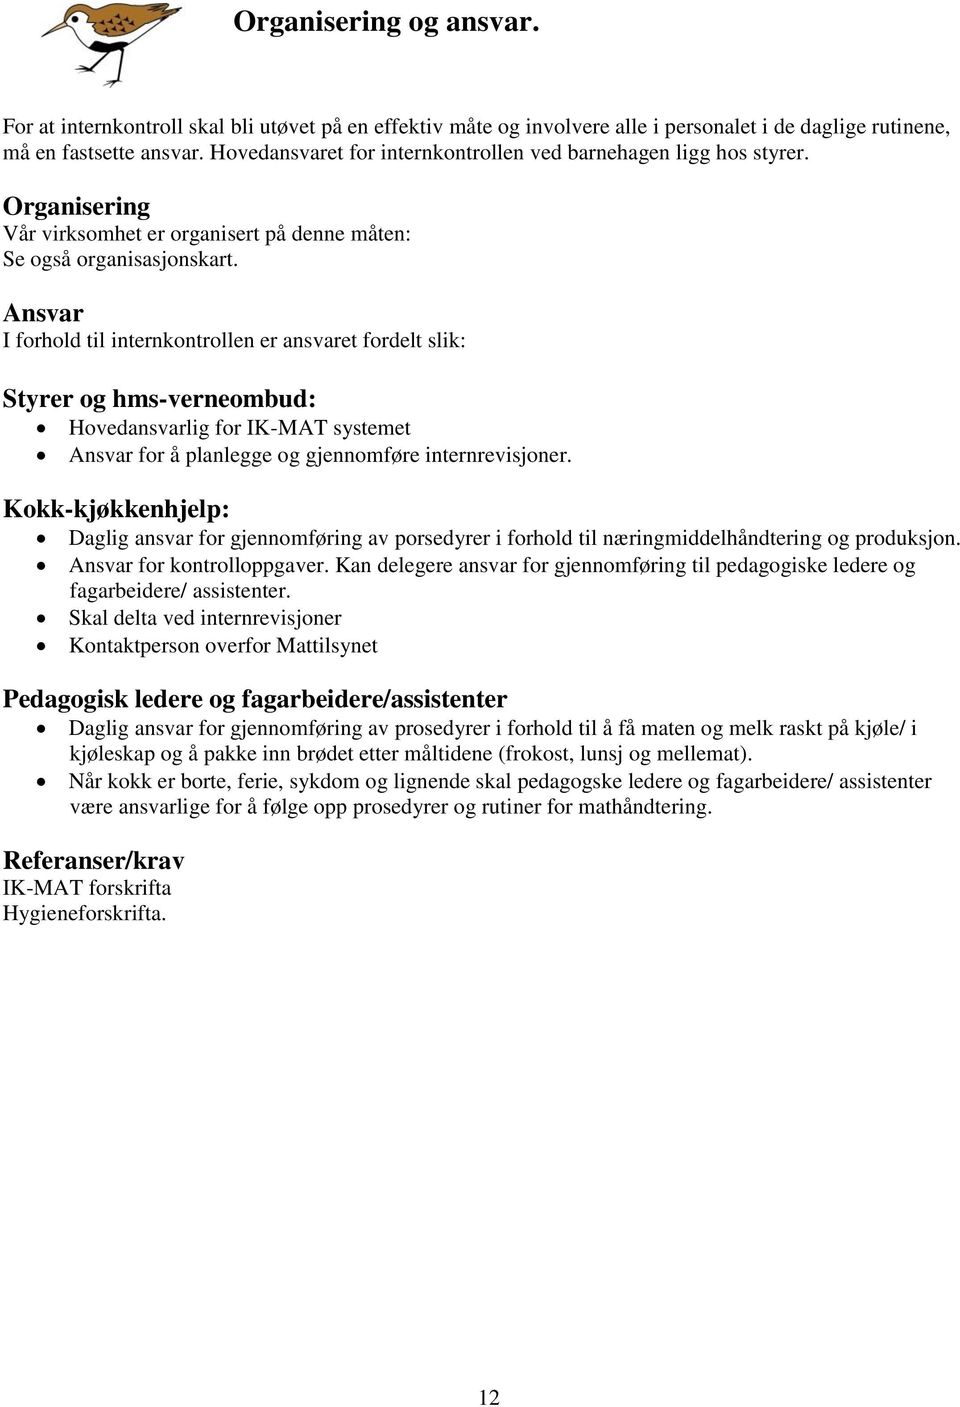 HMS- arbeid i Myrsnibå barnehage - PDF Gratis nedlasting